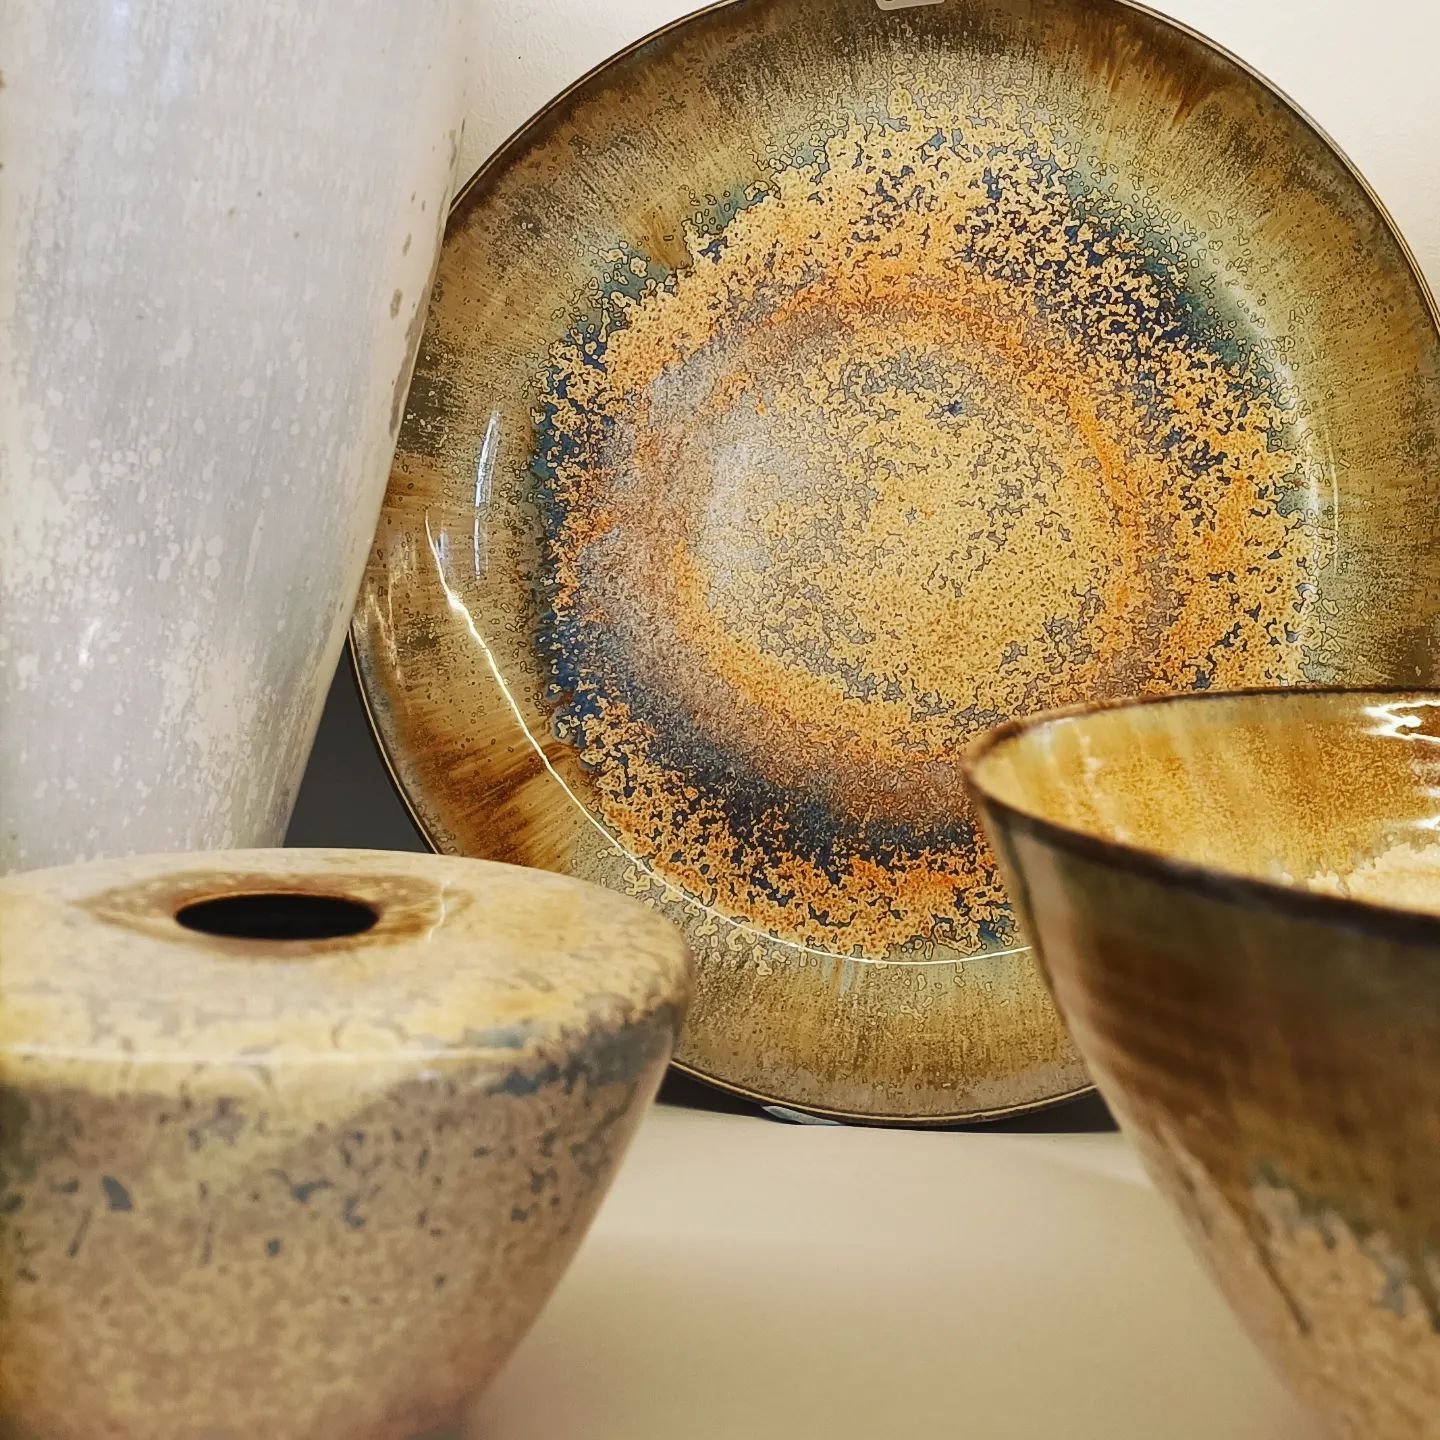 Good morning sunshine! #ceramics #keramics #keramick #pottery #potterystudio #handmade #wheelthrown #artisan #artisandesign #bowls #dish #vase #stoneware #glaze #sun #sunshine #orange #clay #lifestyle #pottersofinstagram #ceramicart #handmade #servies #geschirr #tableware #haarlem